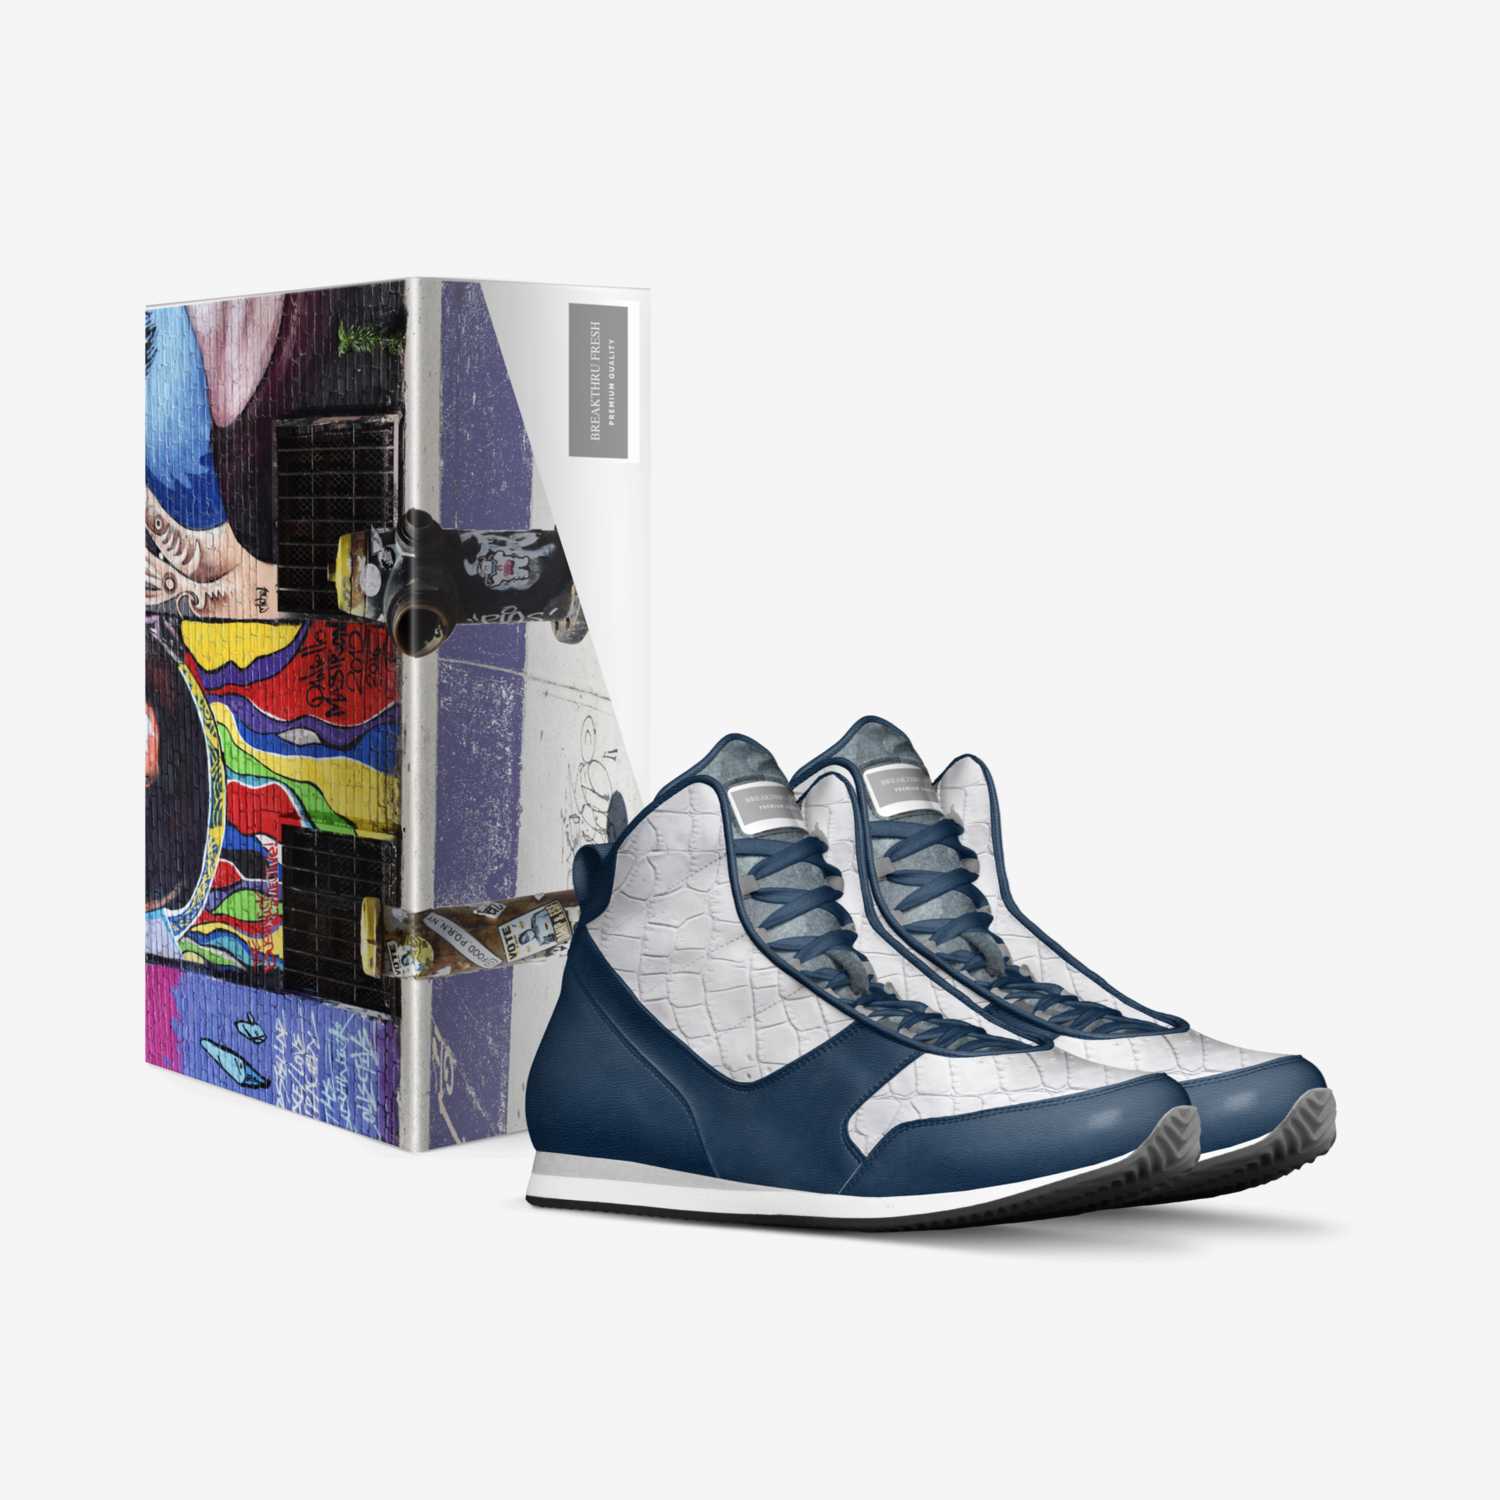 BreakThru Fresh custom made in Italy shoes by Breakthru Team | Box view